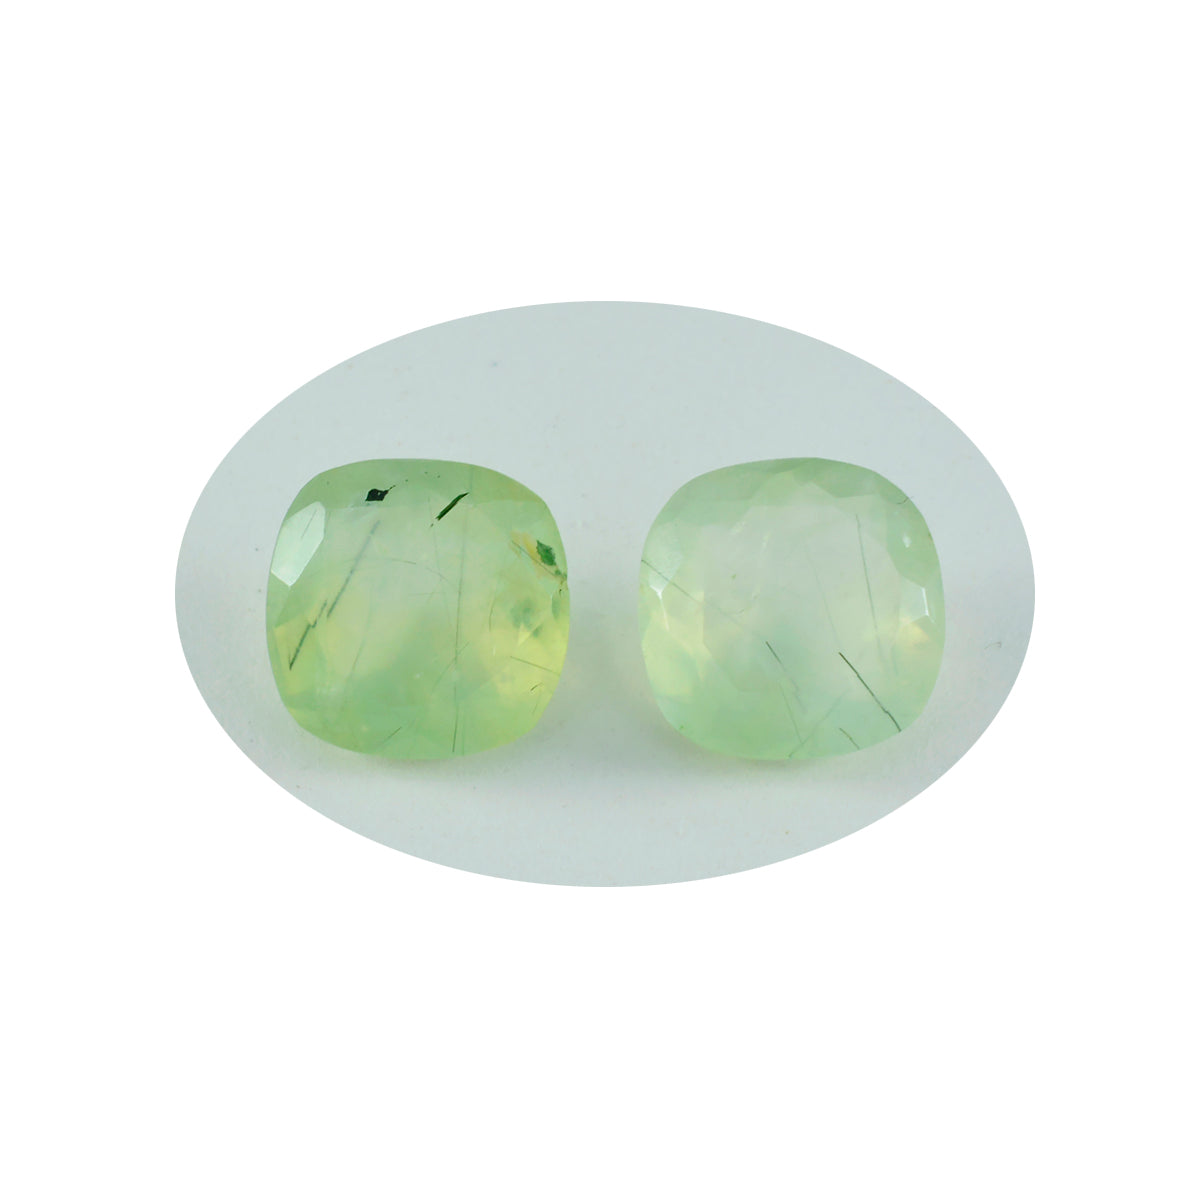 Riyogems 1PC Green Prehnite Faceted 11x11 mm Cushion Shape attractive Quality Loose Stone